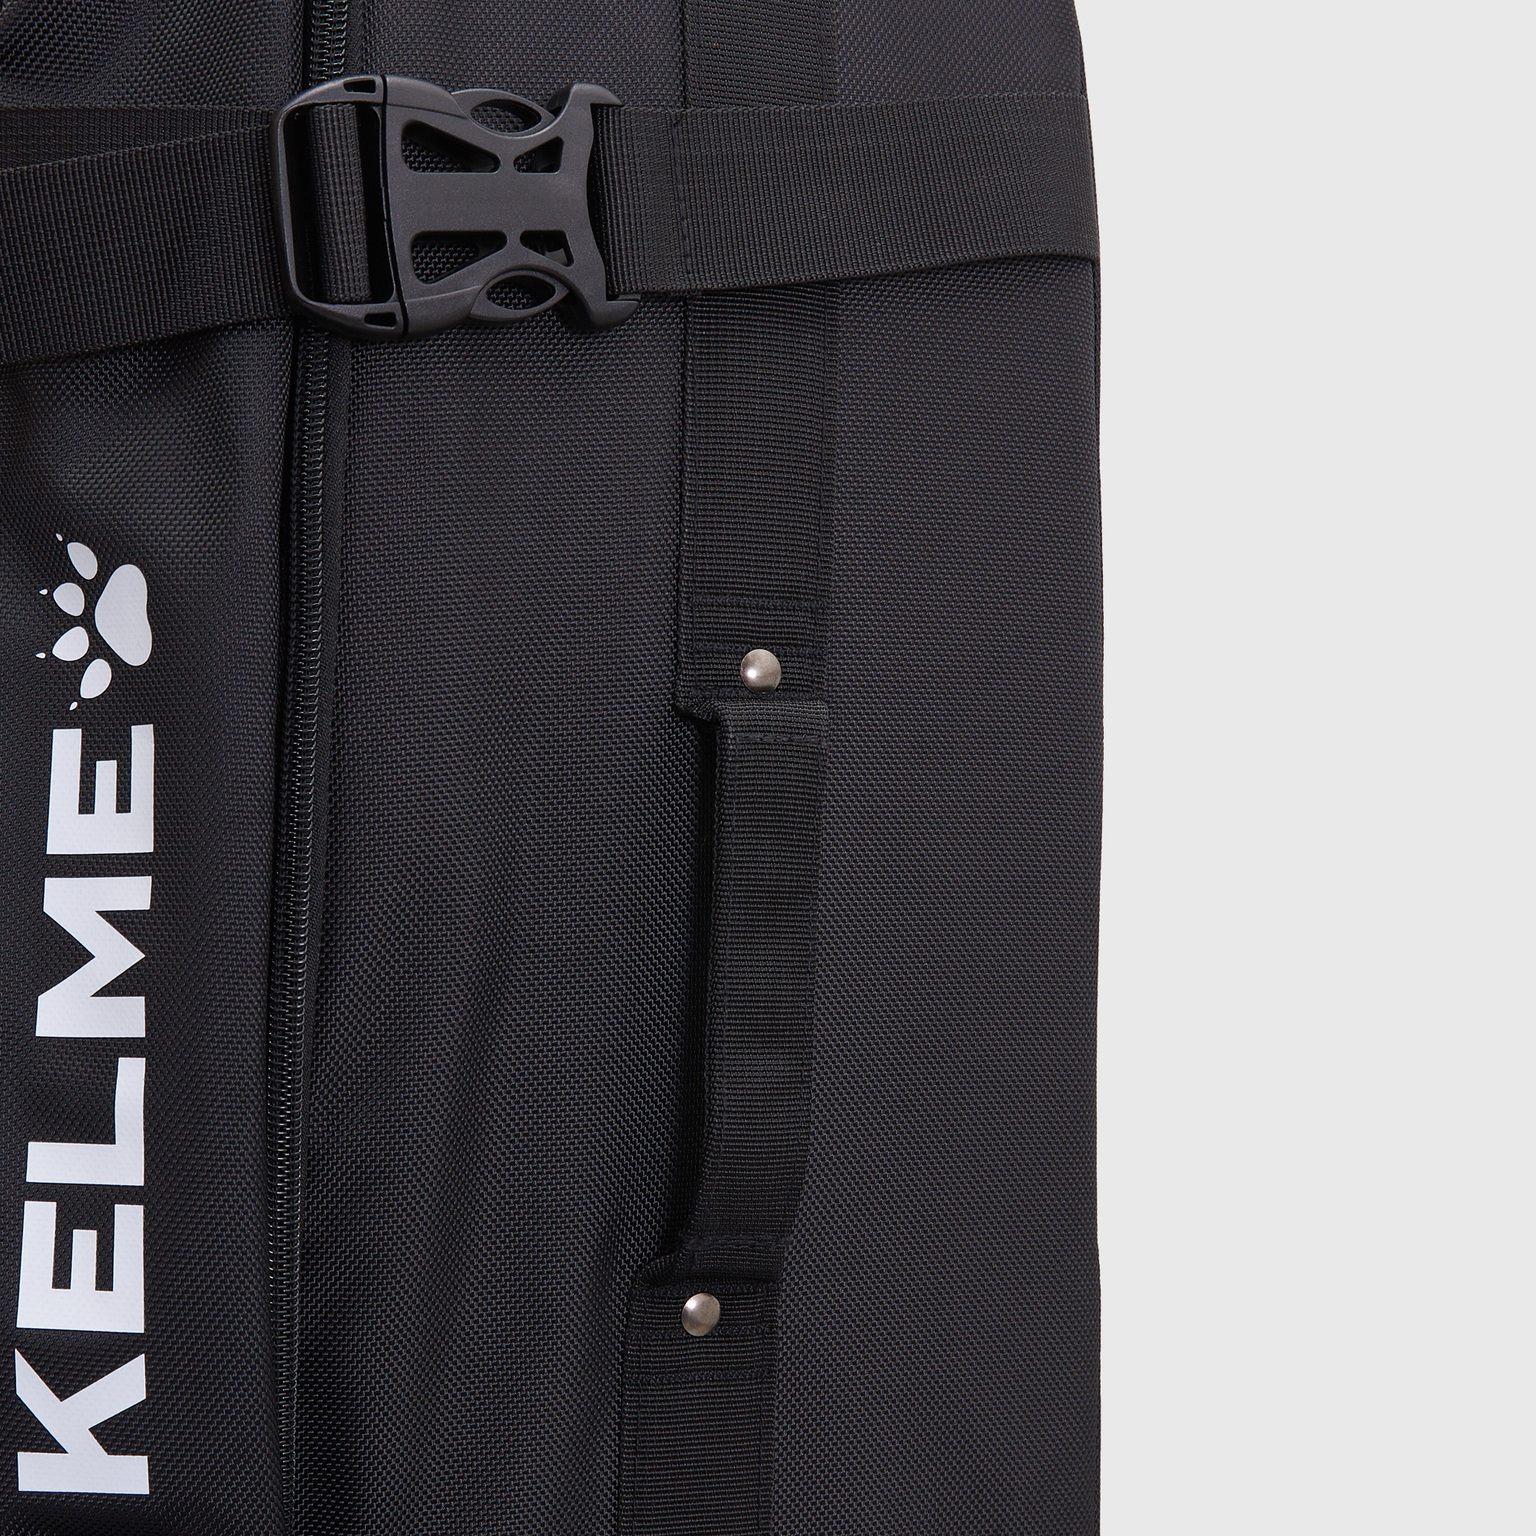 Сумка на колесах Kelme Trolley Bag Large K15S959-000